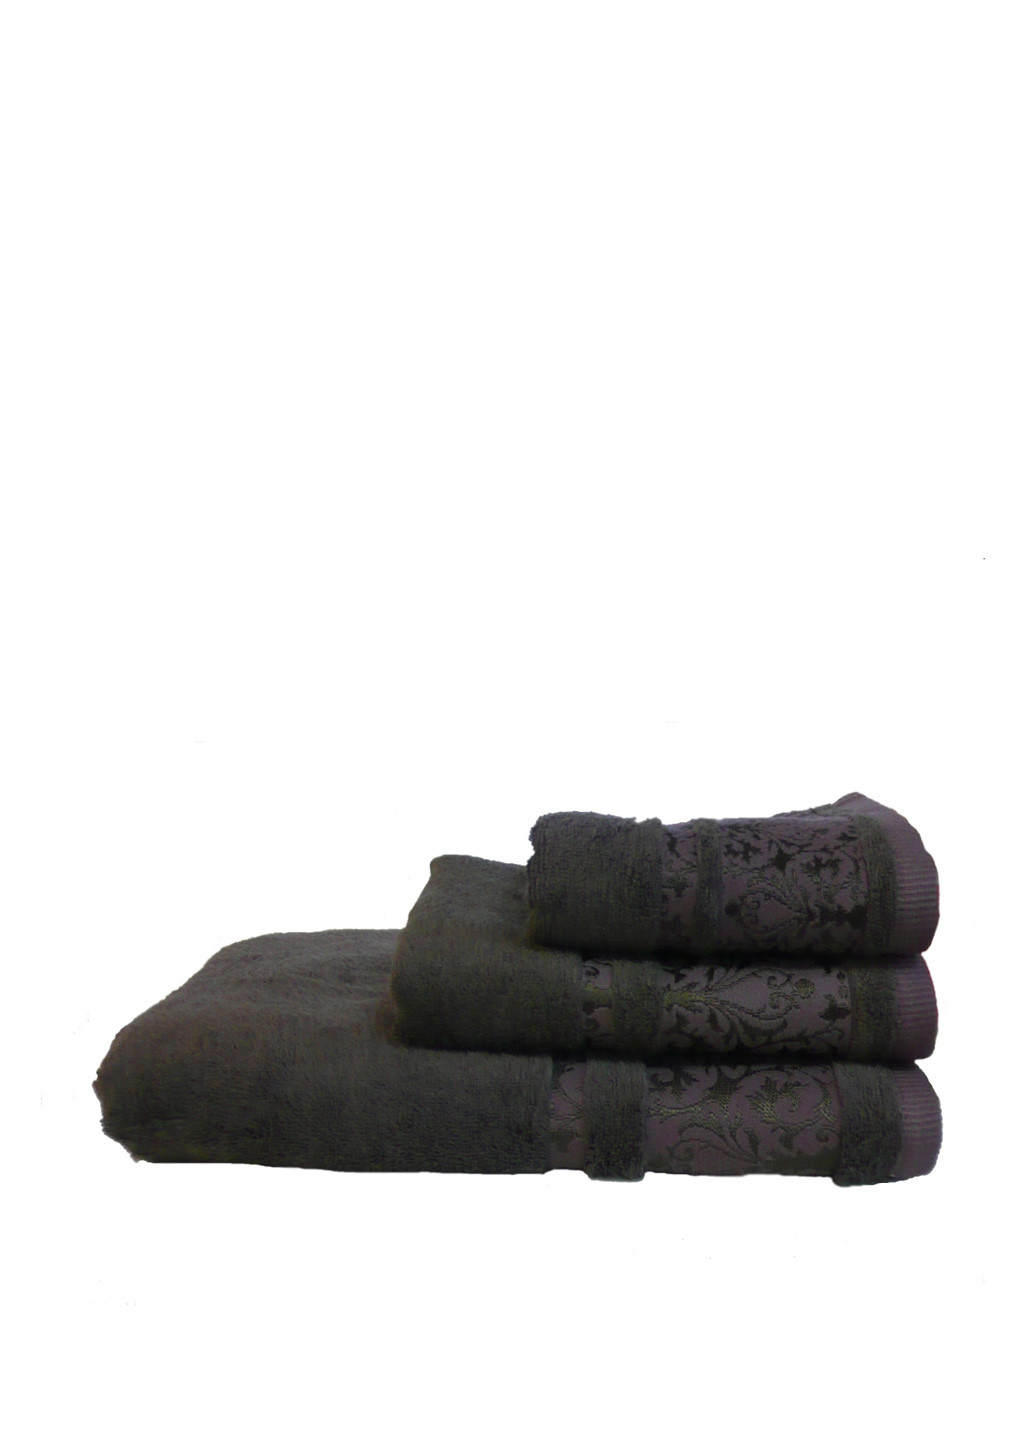 Home Line полотенце, 50х90 см однотонный коричневый производство - Турция